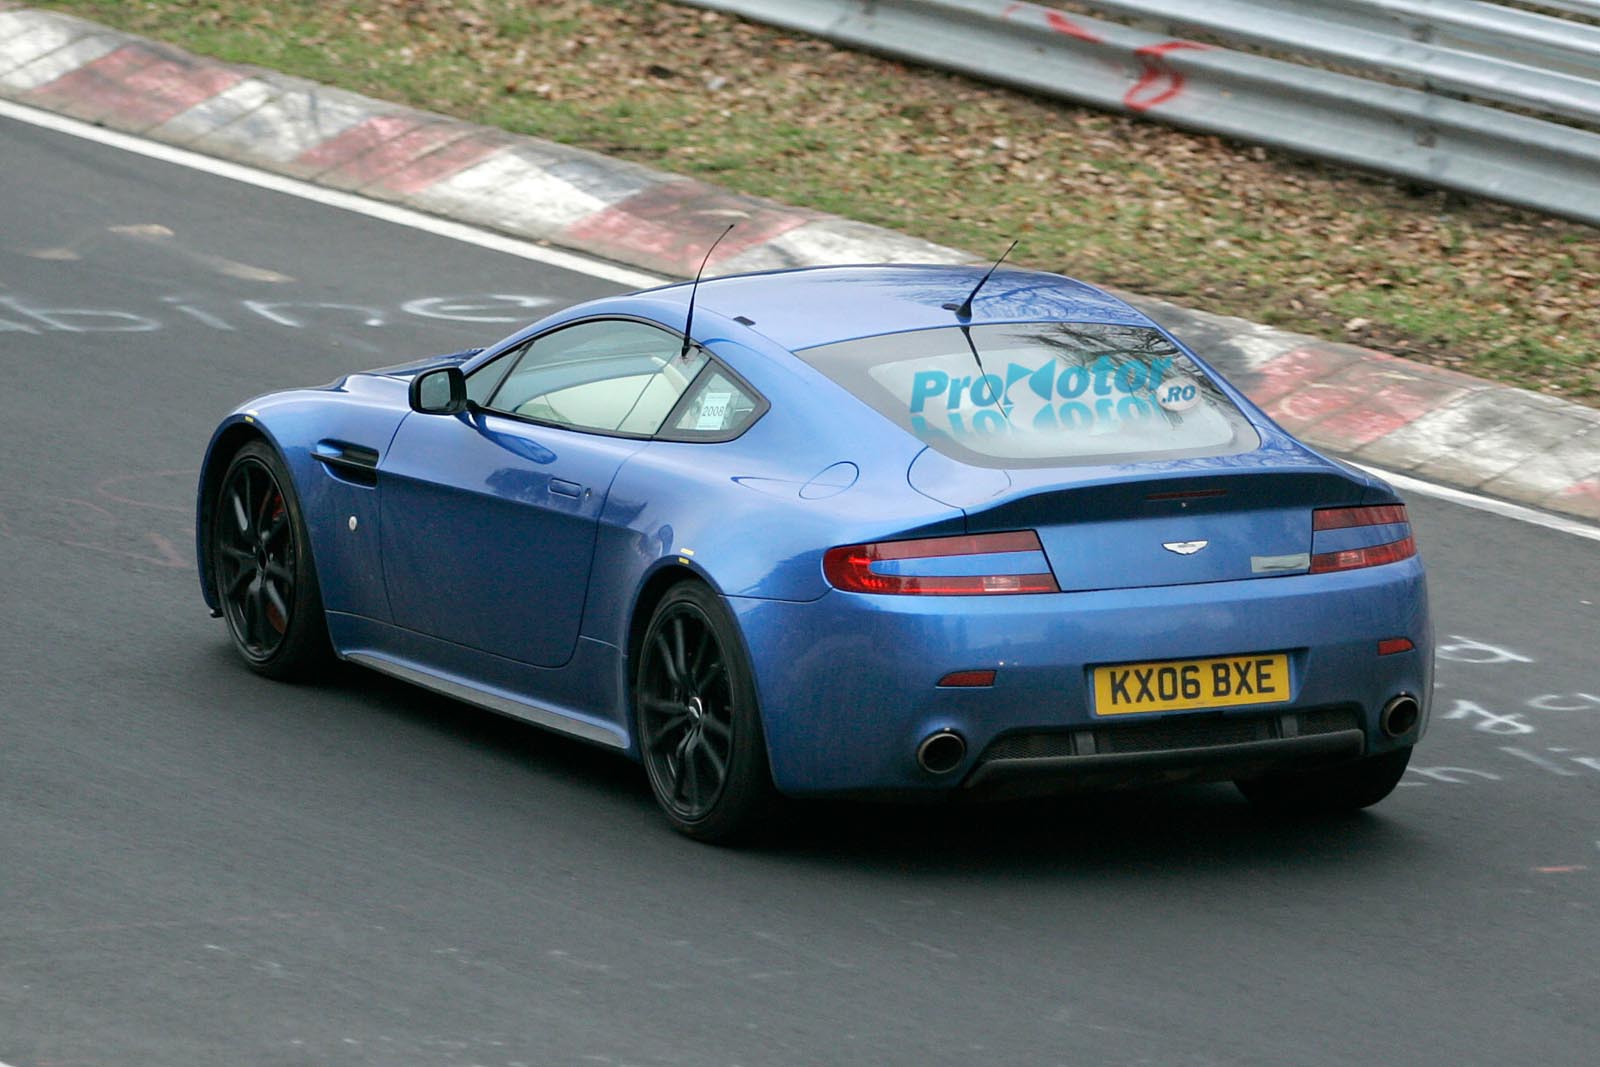 Aston Martin V12 Vantage RS - poze spion